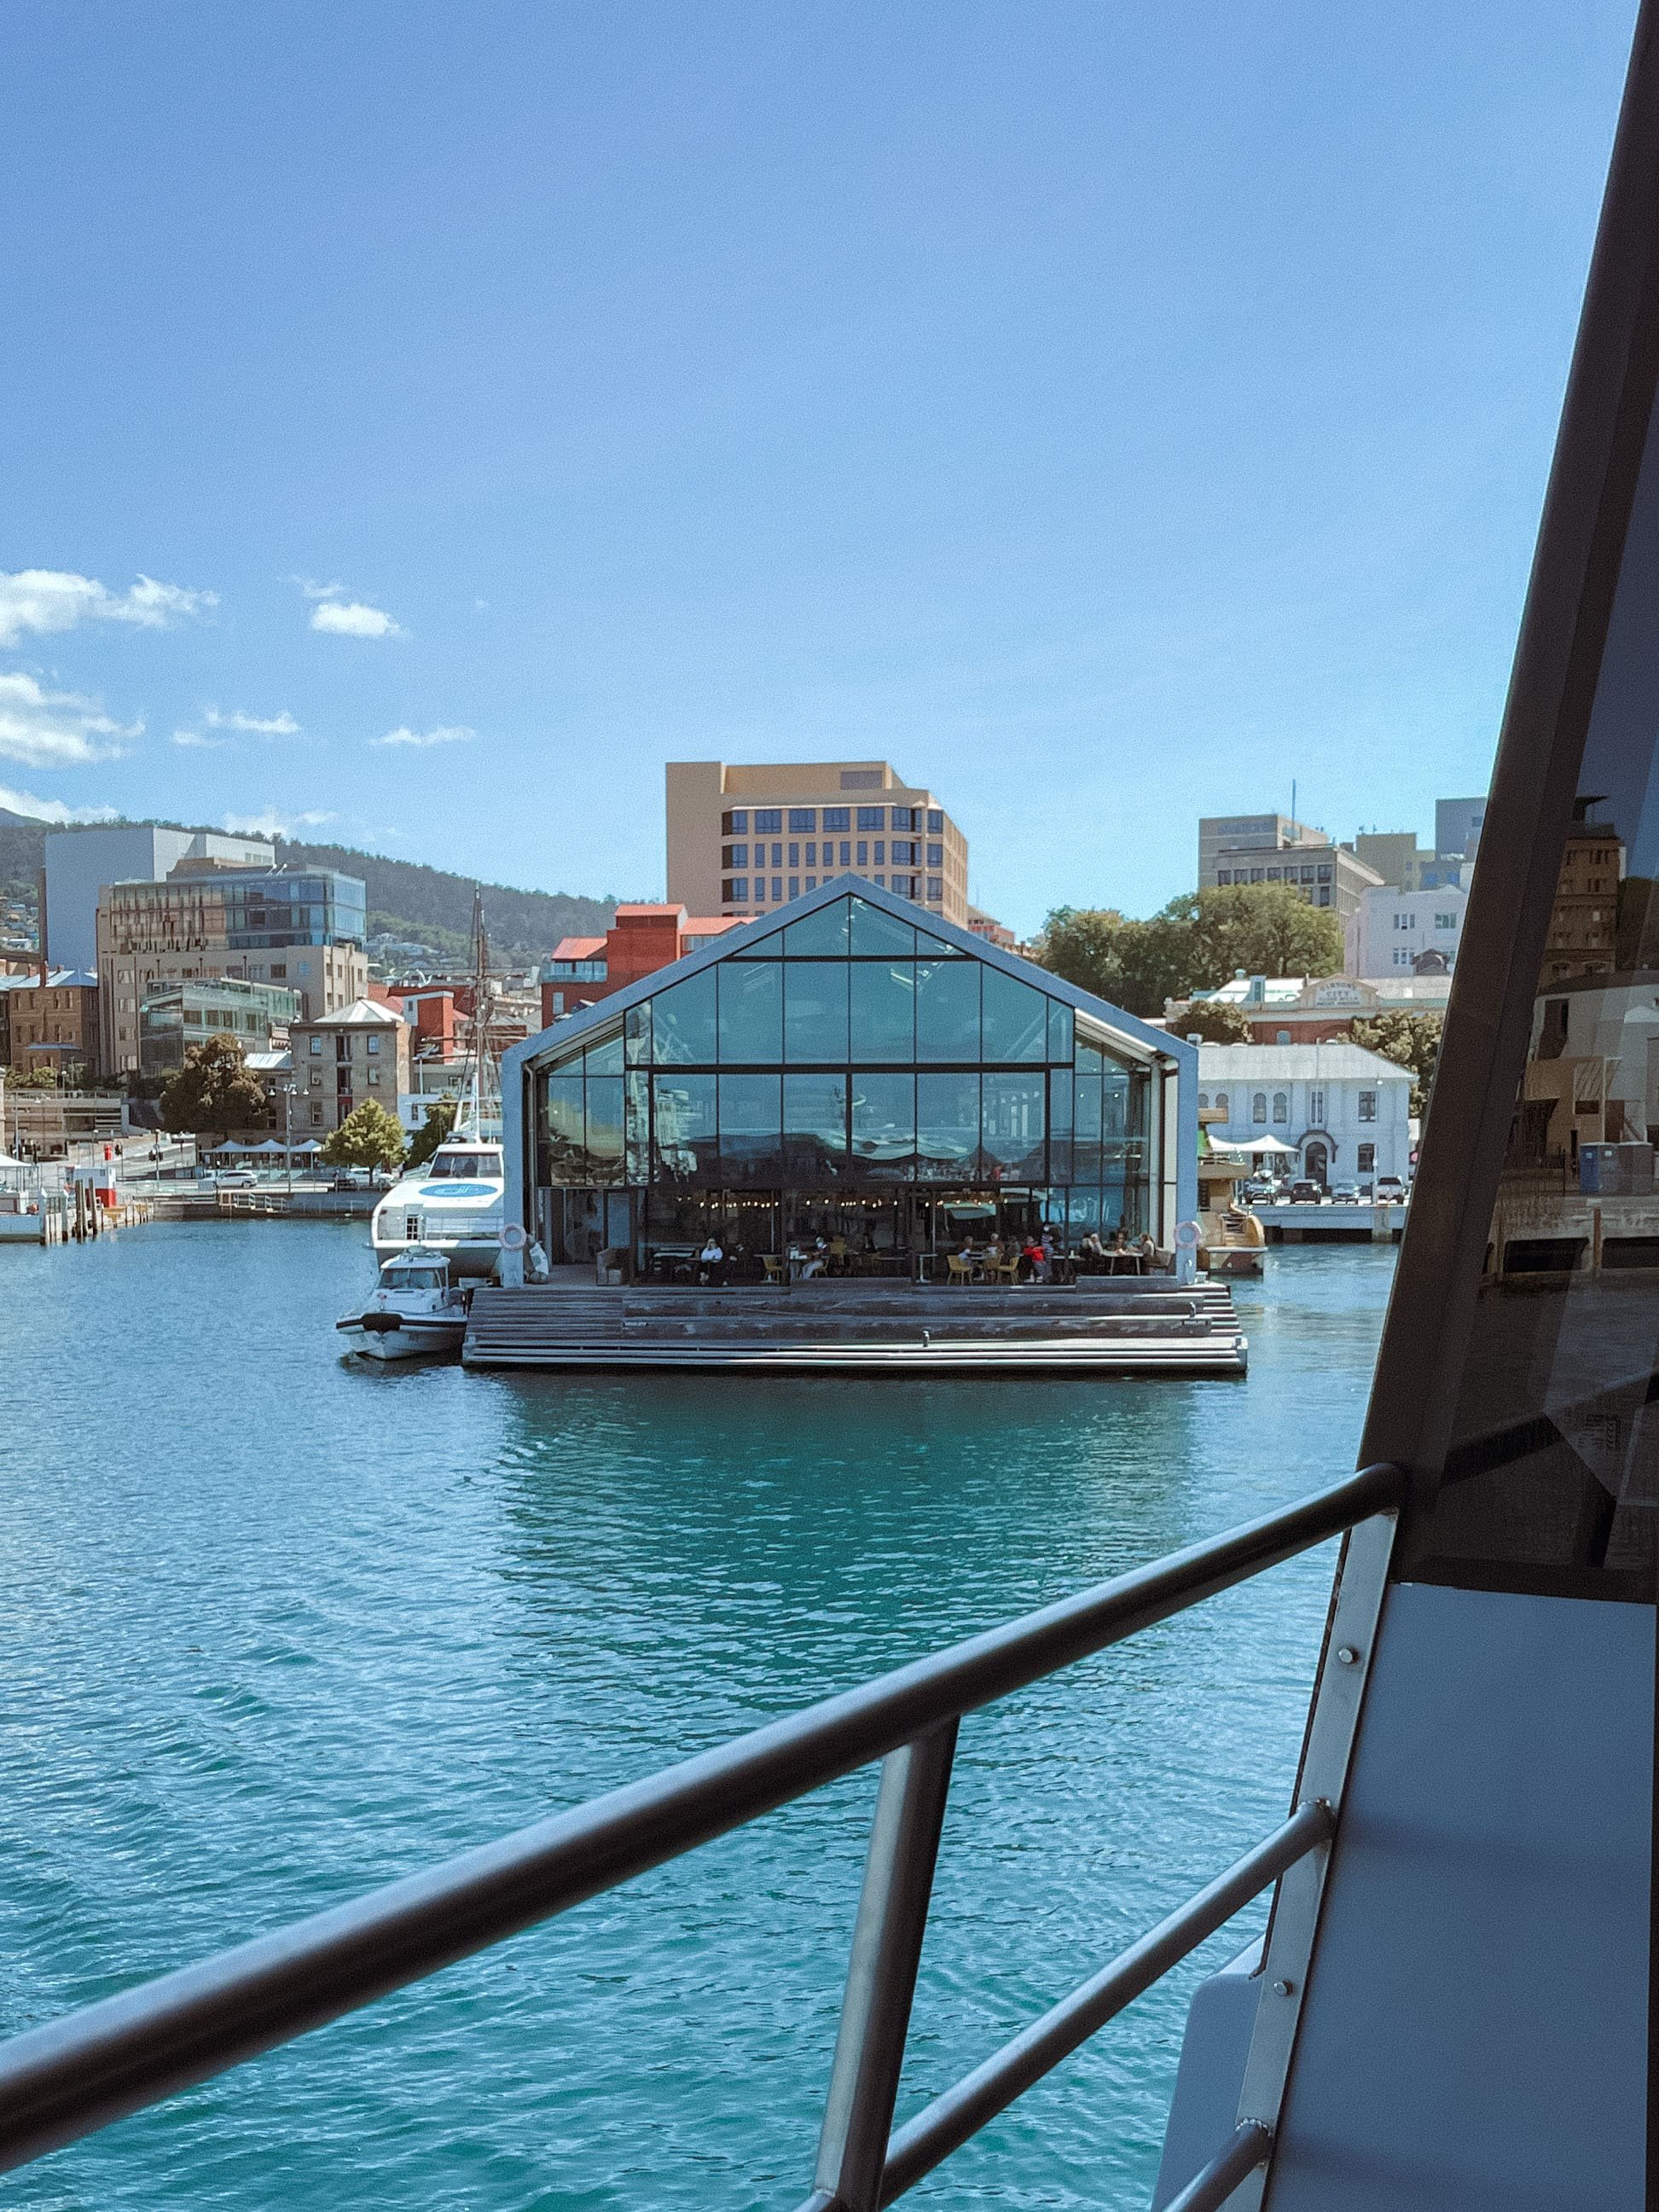 Taking the ferry to visit MONA Museum - Hobart - Tasmania - Australia